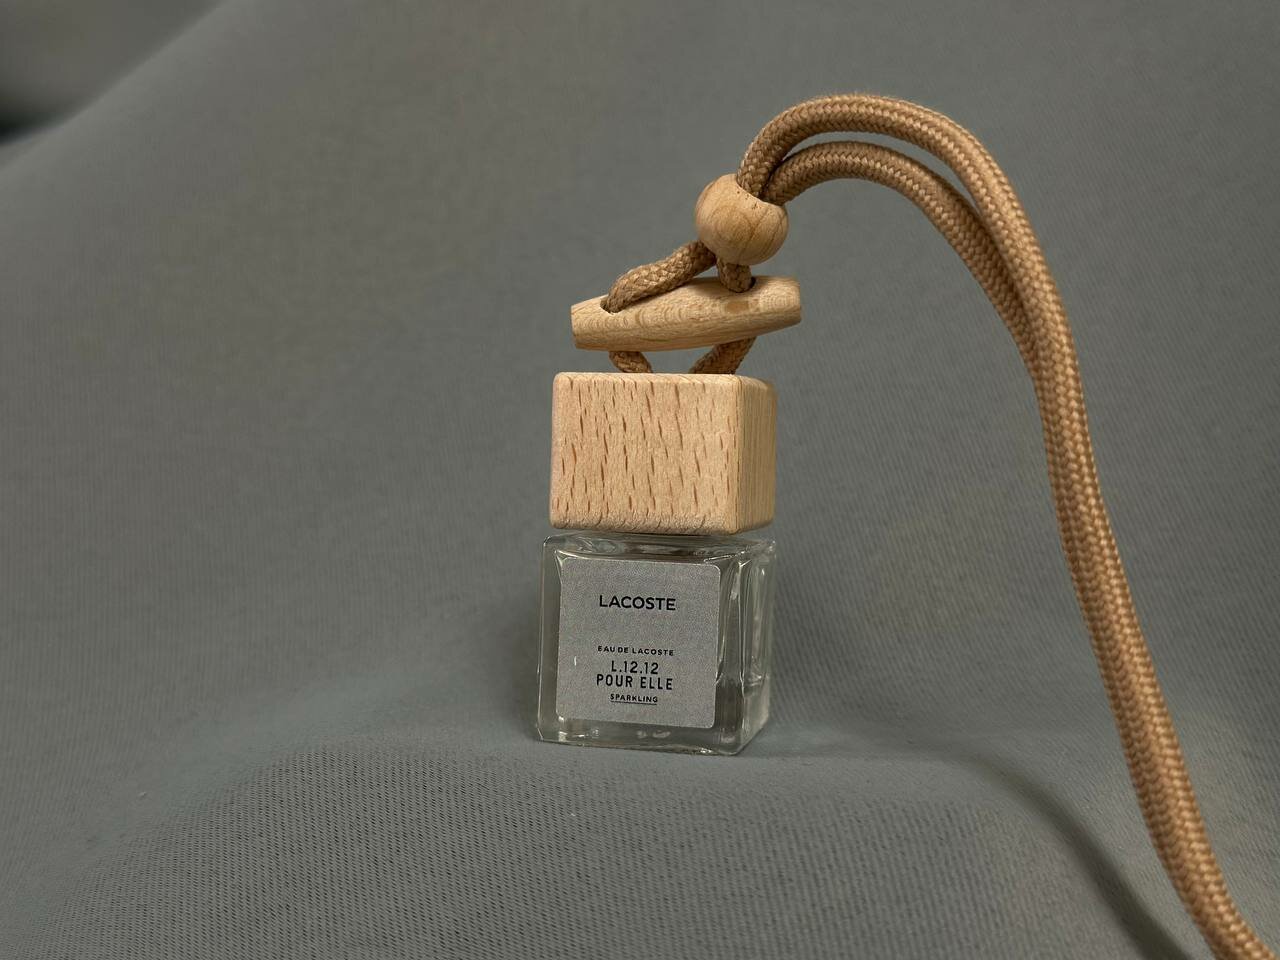 "Lacoste l.12.12 pour elle sparkling" - авто-парфюм по мотивам легендарного аромата